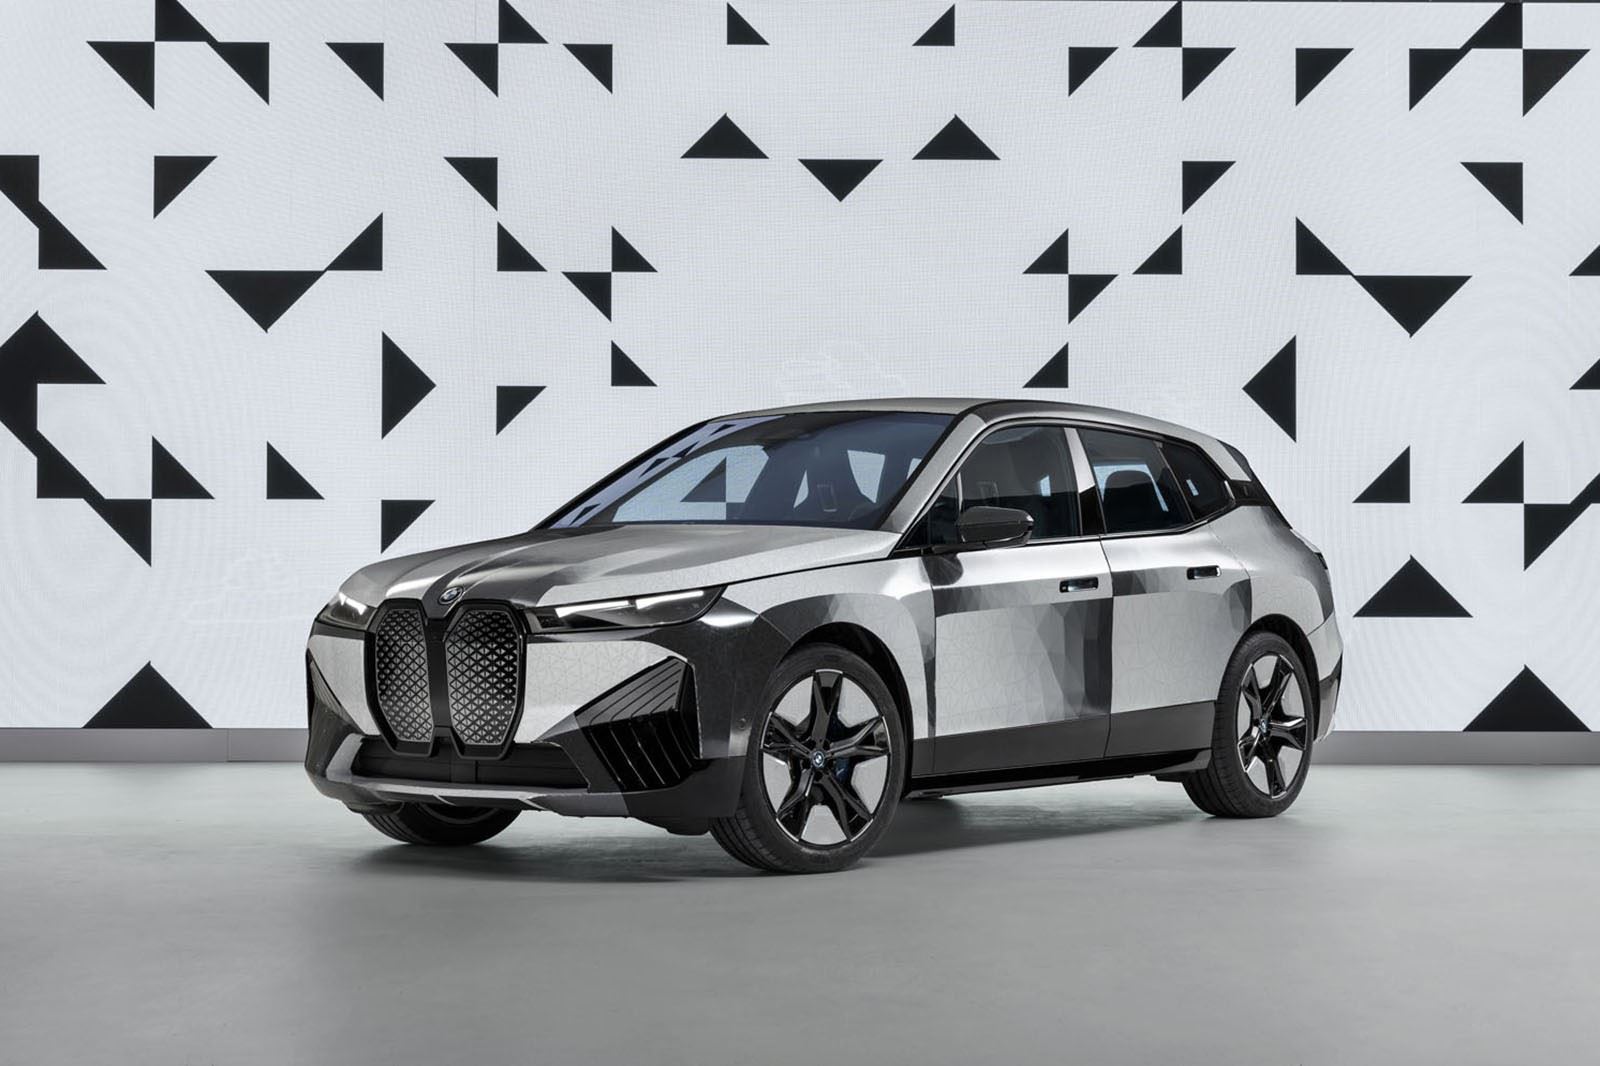 BMW colour changing concept model